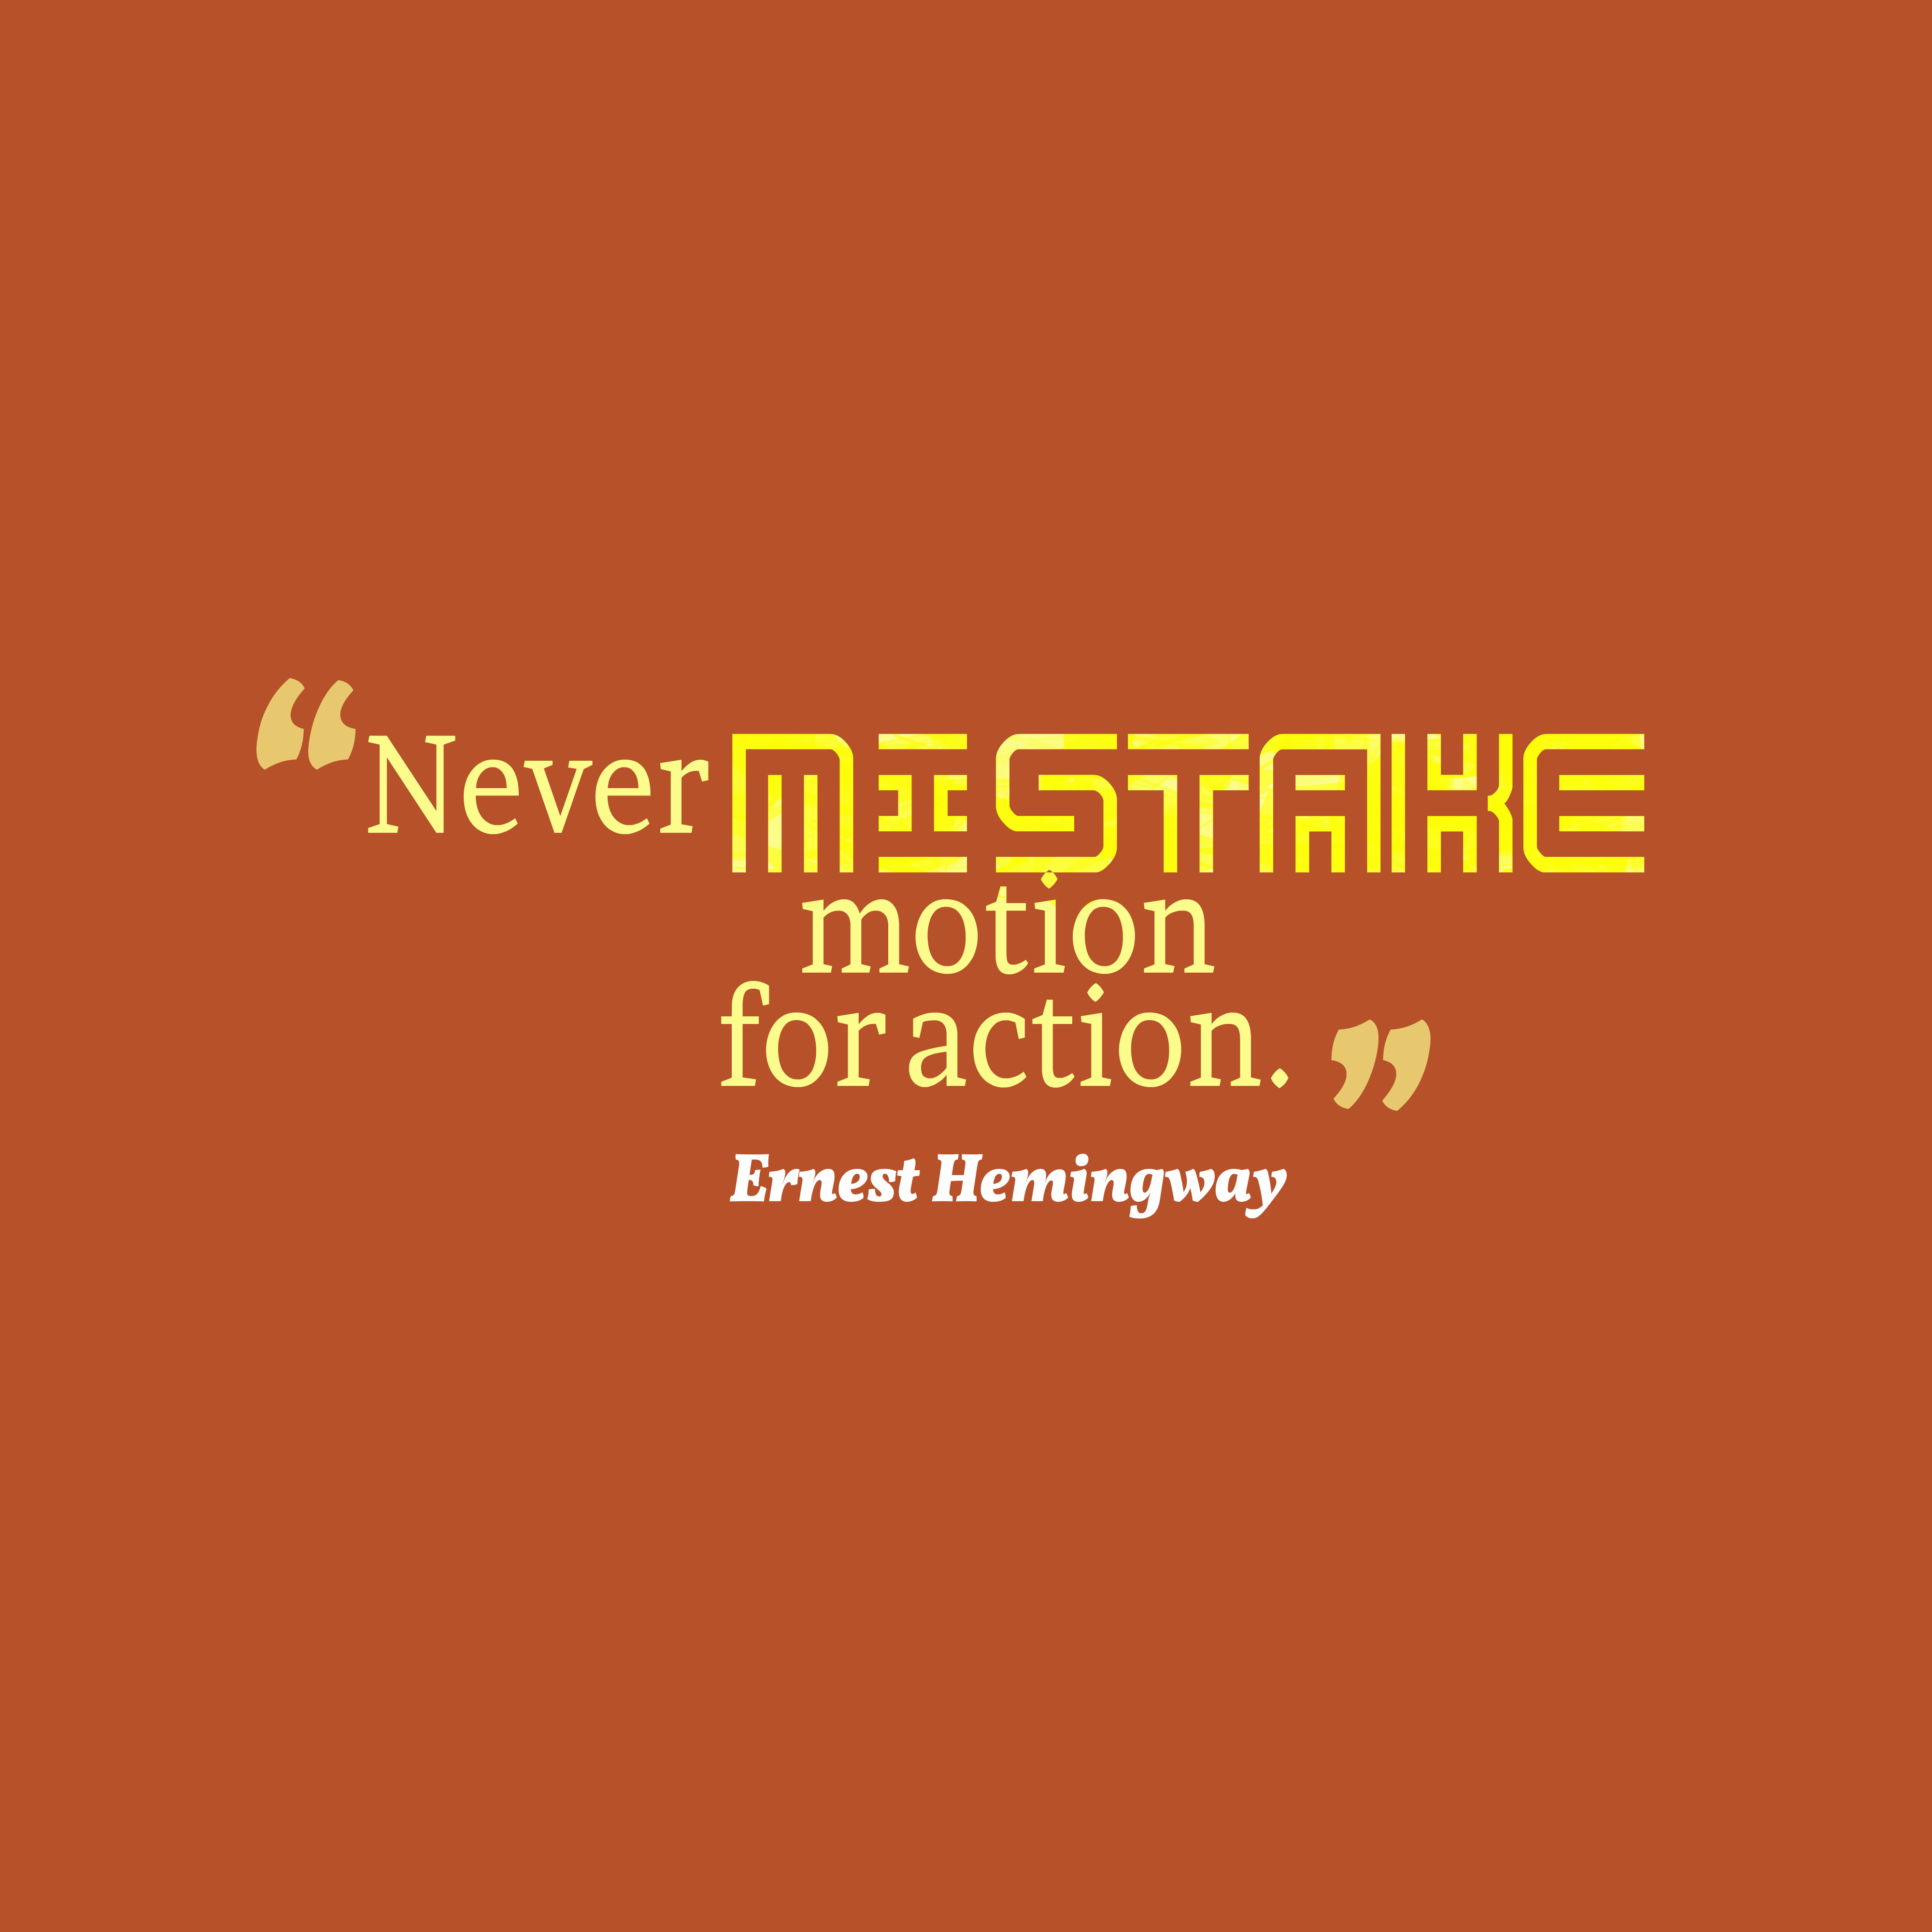 Never mistake motion for action. Ernest Hemingway